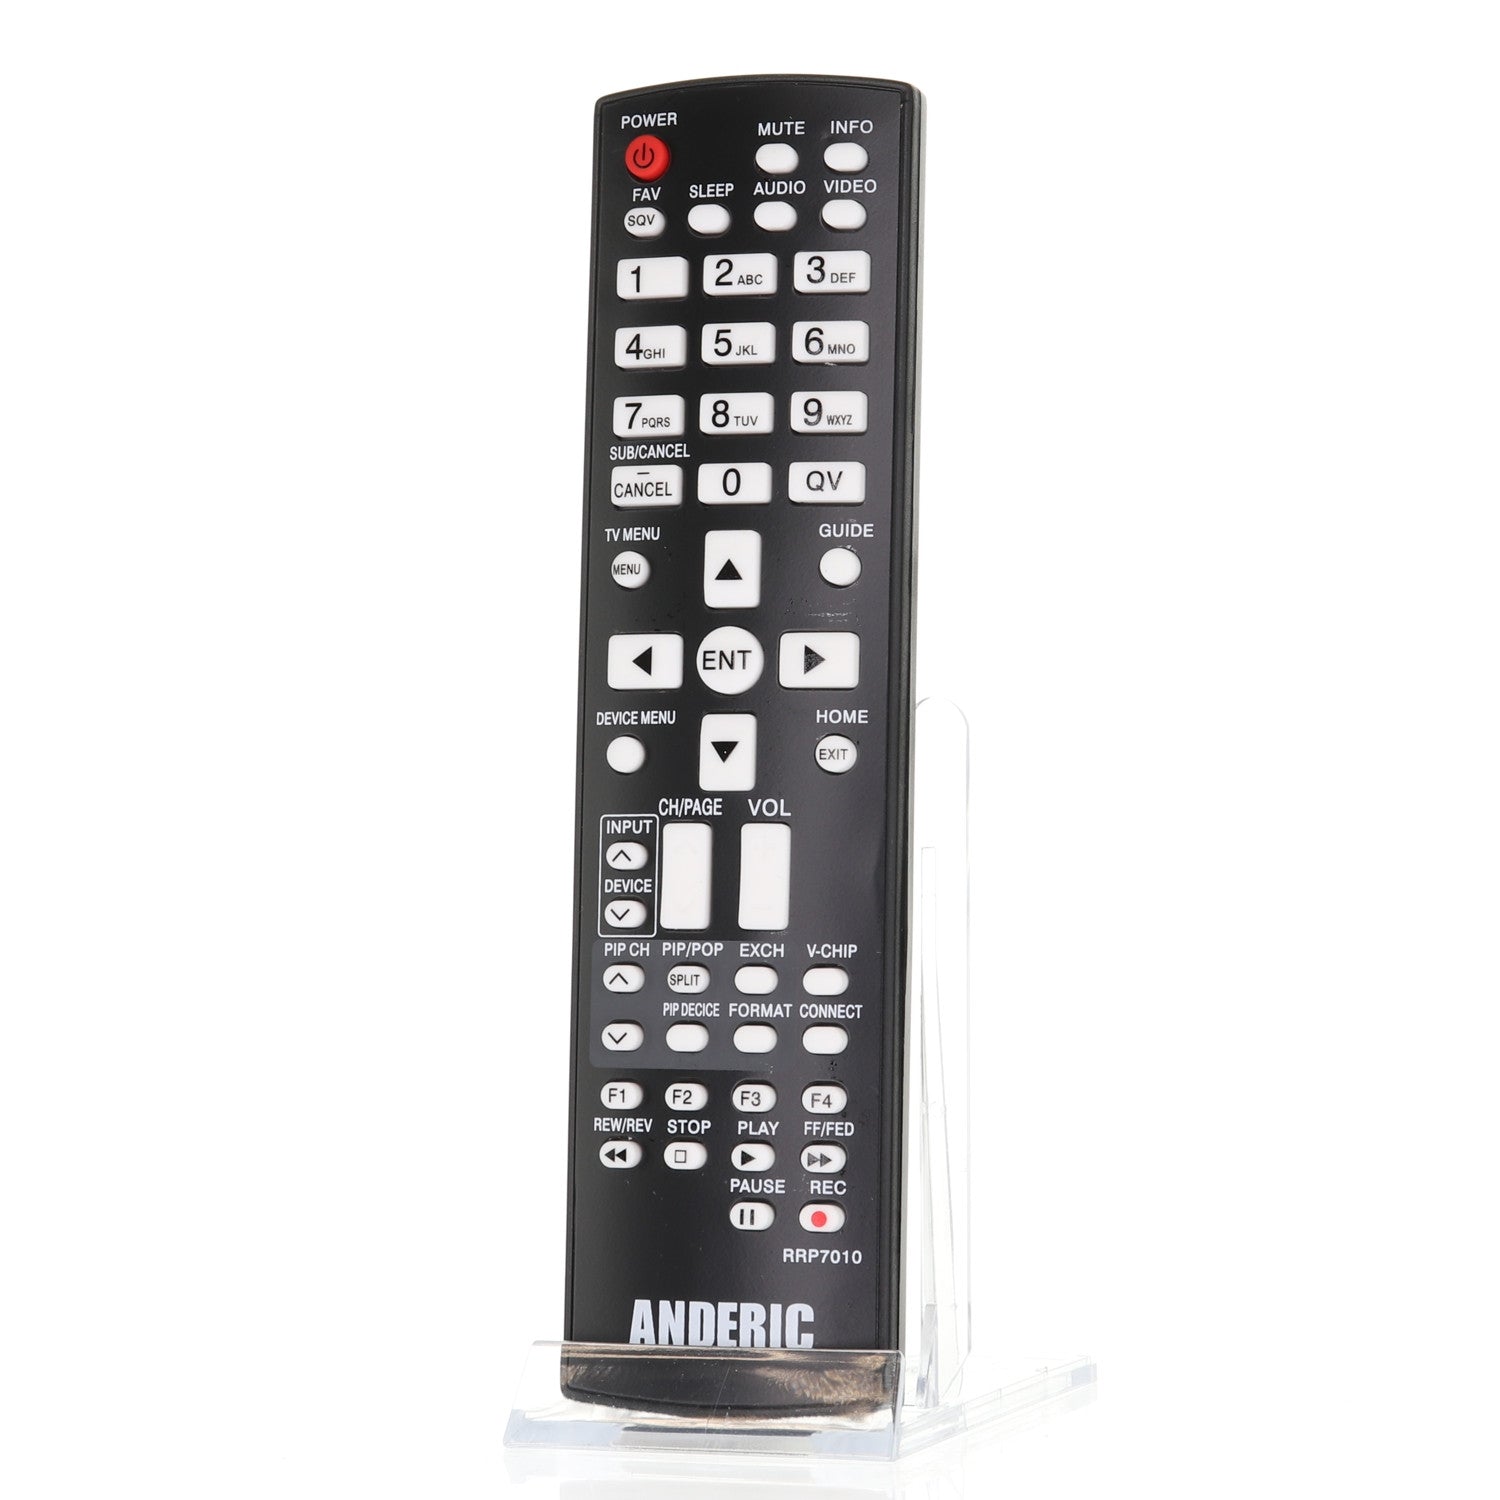 RRP7010 Remote Control for Mitsubishi® TVs